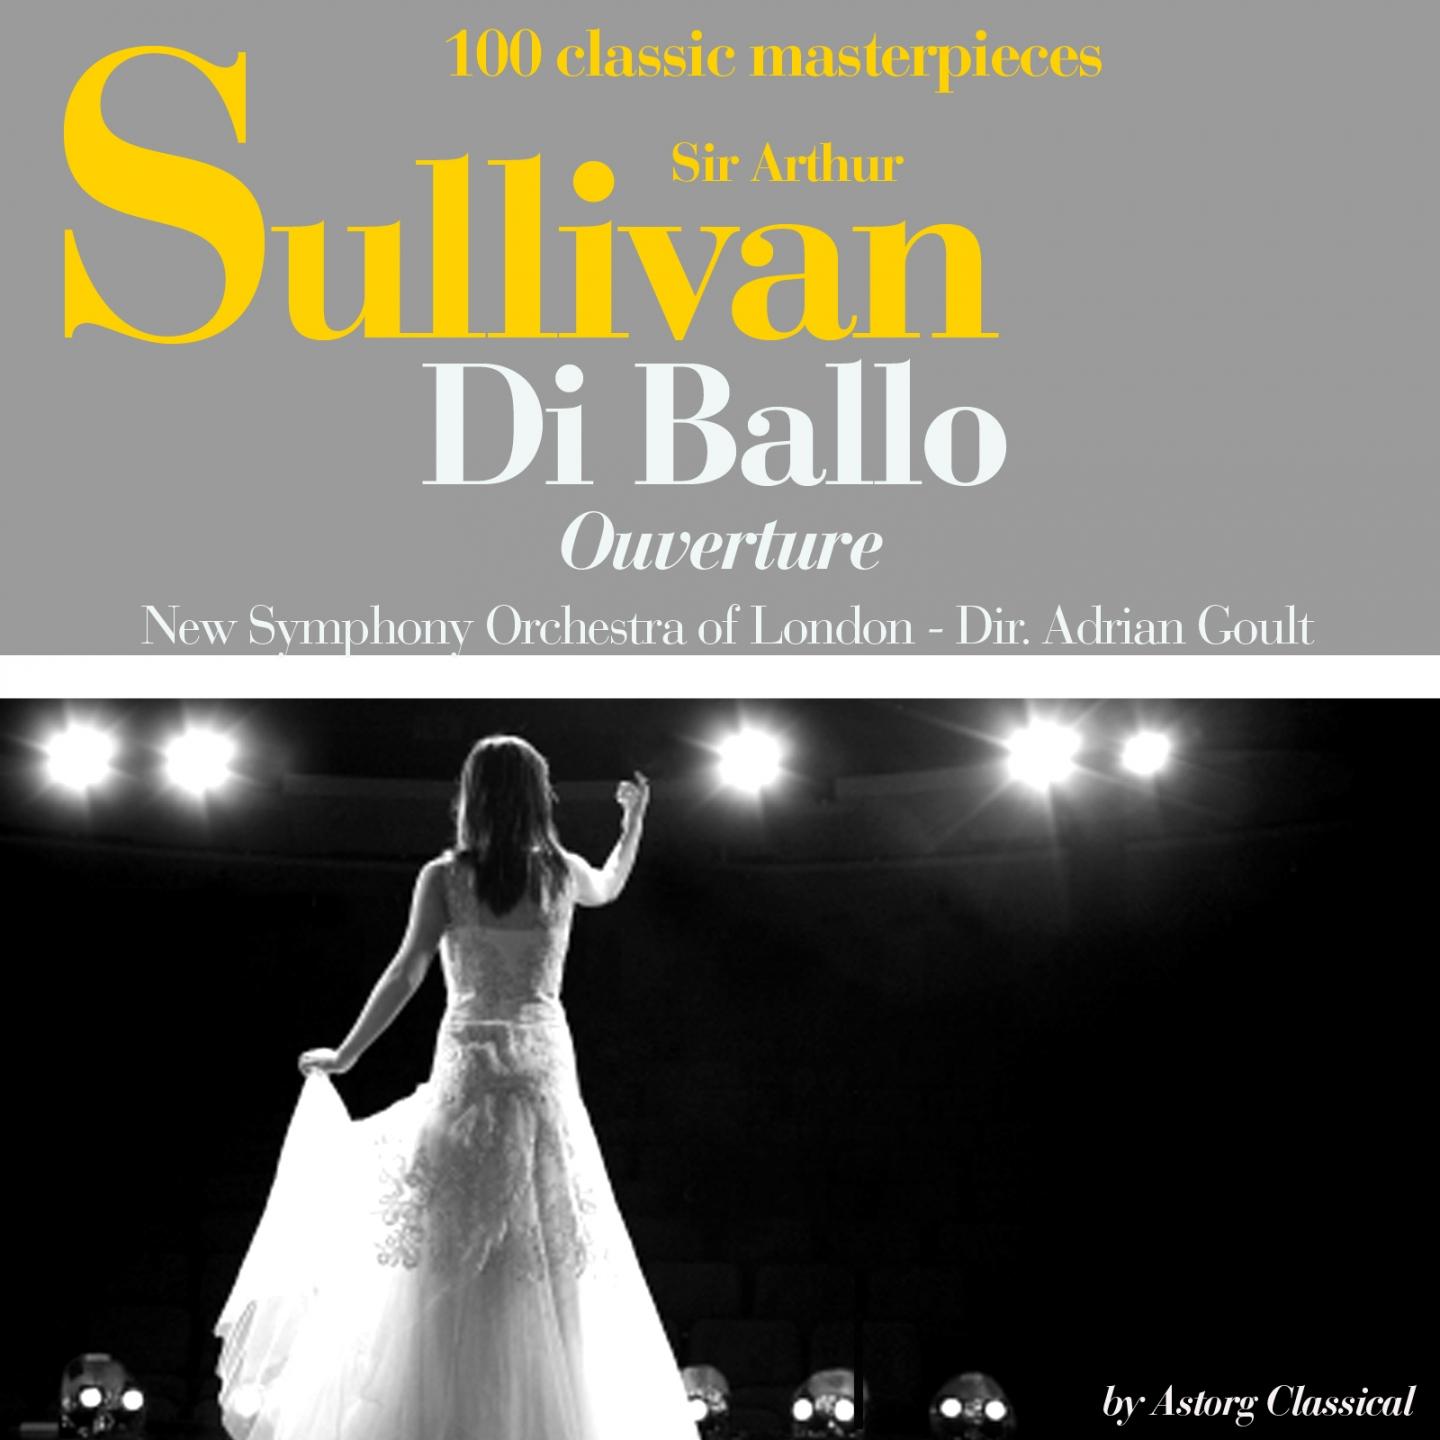 Sir Arthur Sullivan : Di ballo, ouverture (100 classic masterpieces)